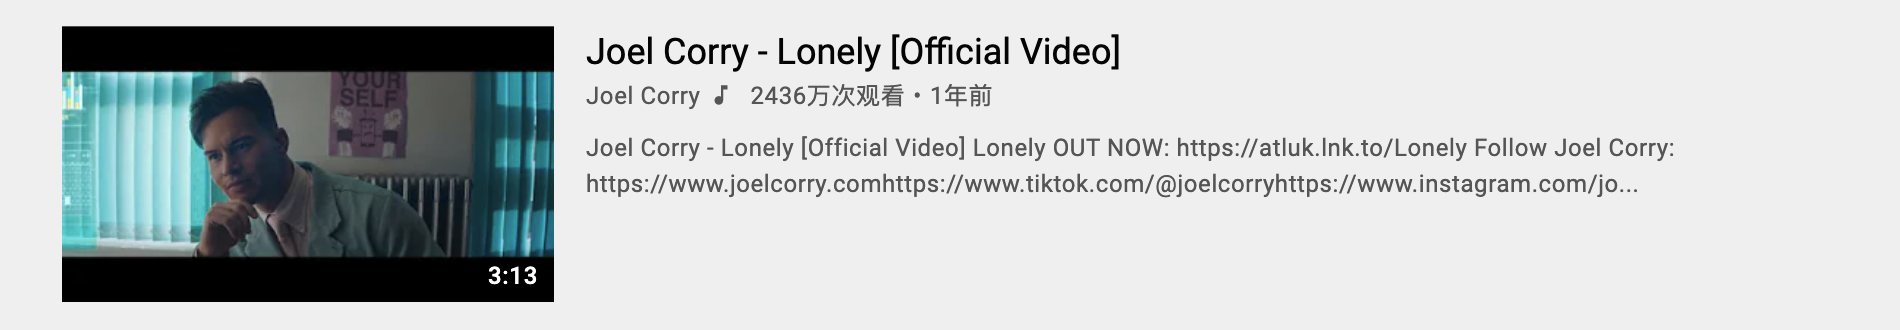 《Lonely》MV在YouTube的播放量高达2436万次